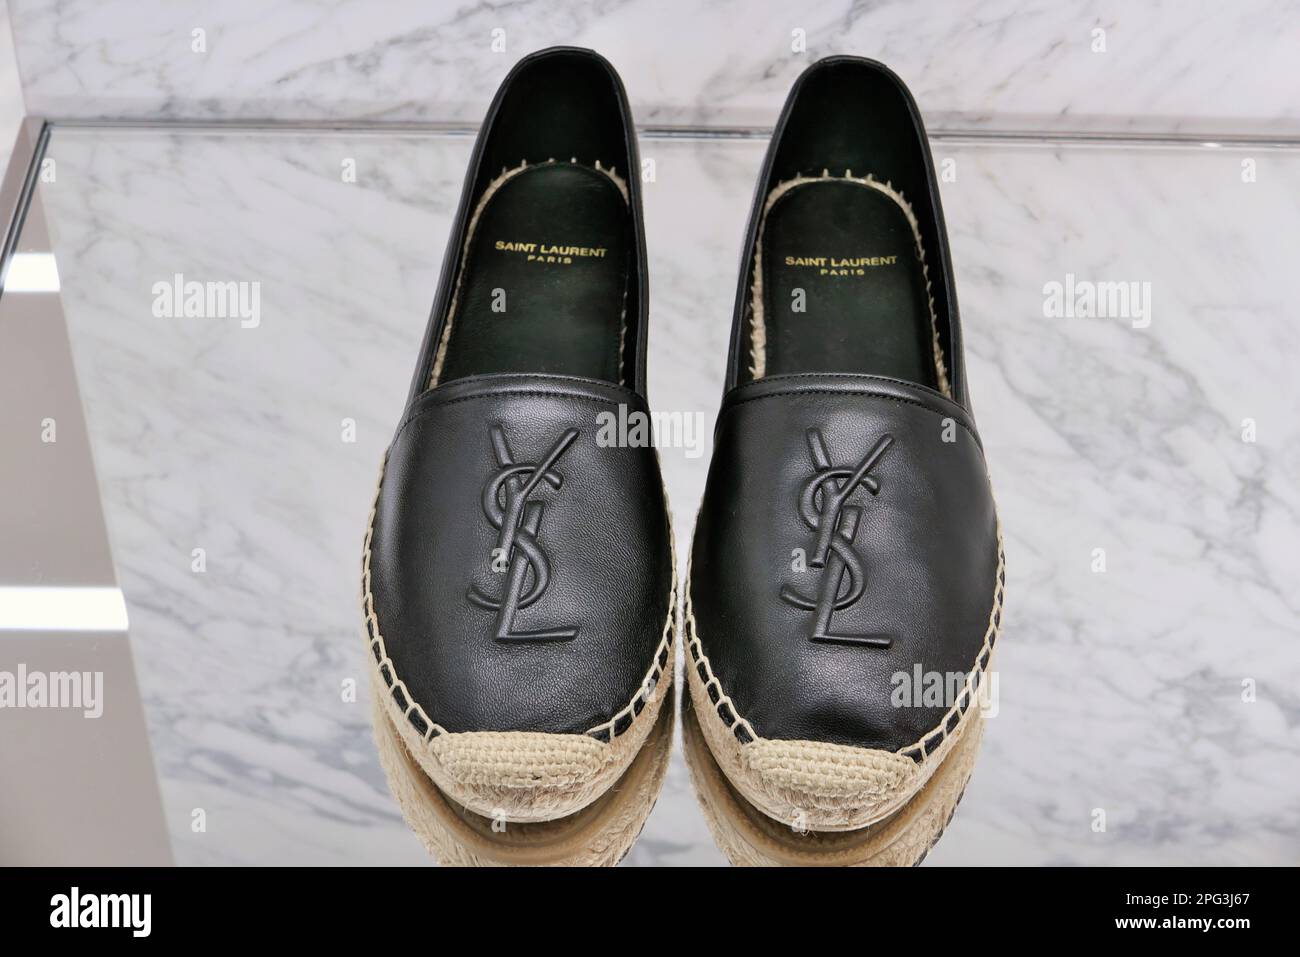 Saint laurent shoes fotografías e imágenes de alta resolución - Alamy